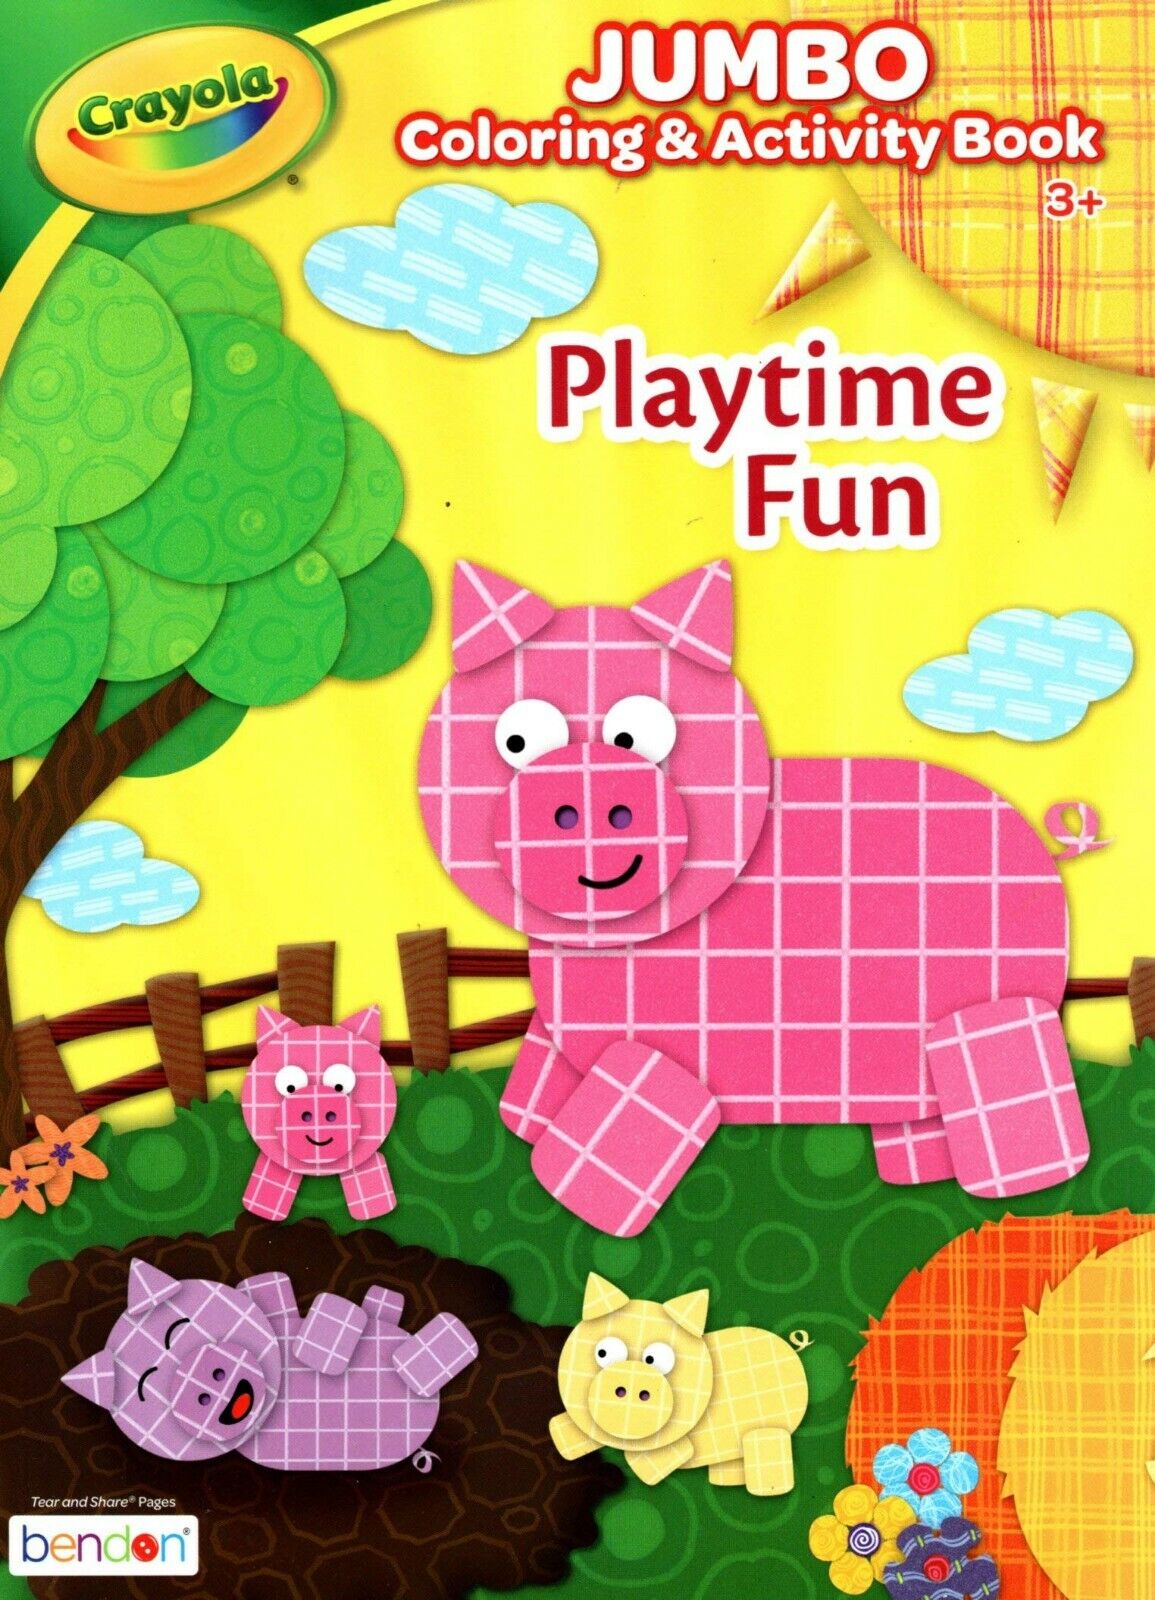 Crayola - Jumbo Coloring & Activity Book - Playtime Fun